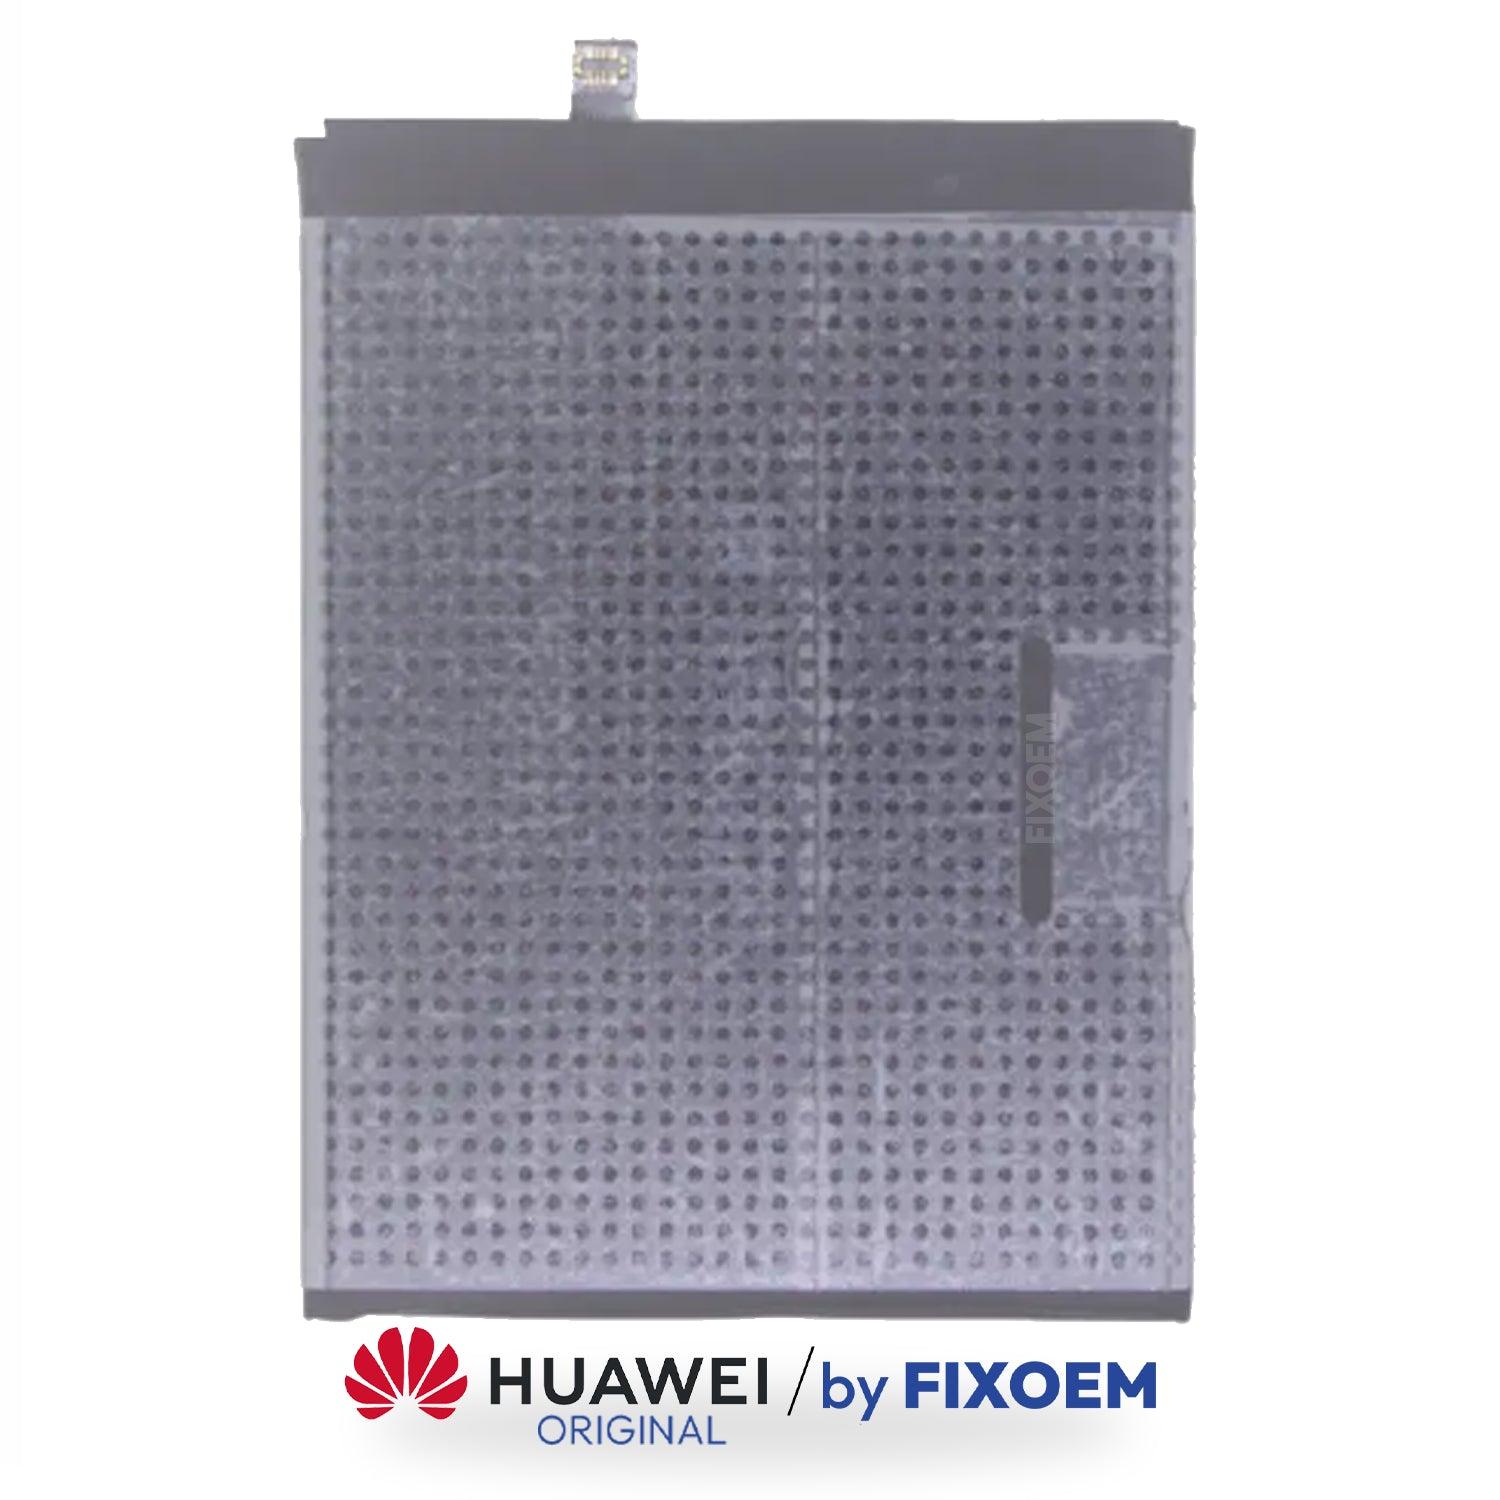 Bateria Huawei Hb366481Ecw P8 Ale-L23 /P9/ P9 Lite Pra-Lx3/P10 Lite/Y7 2018 /Y7 Prime 2018/ P20 Lite/Honor 5C/7C/8 Y6 2018. |+2,000 reseñas 4.8/5 ⭐